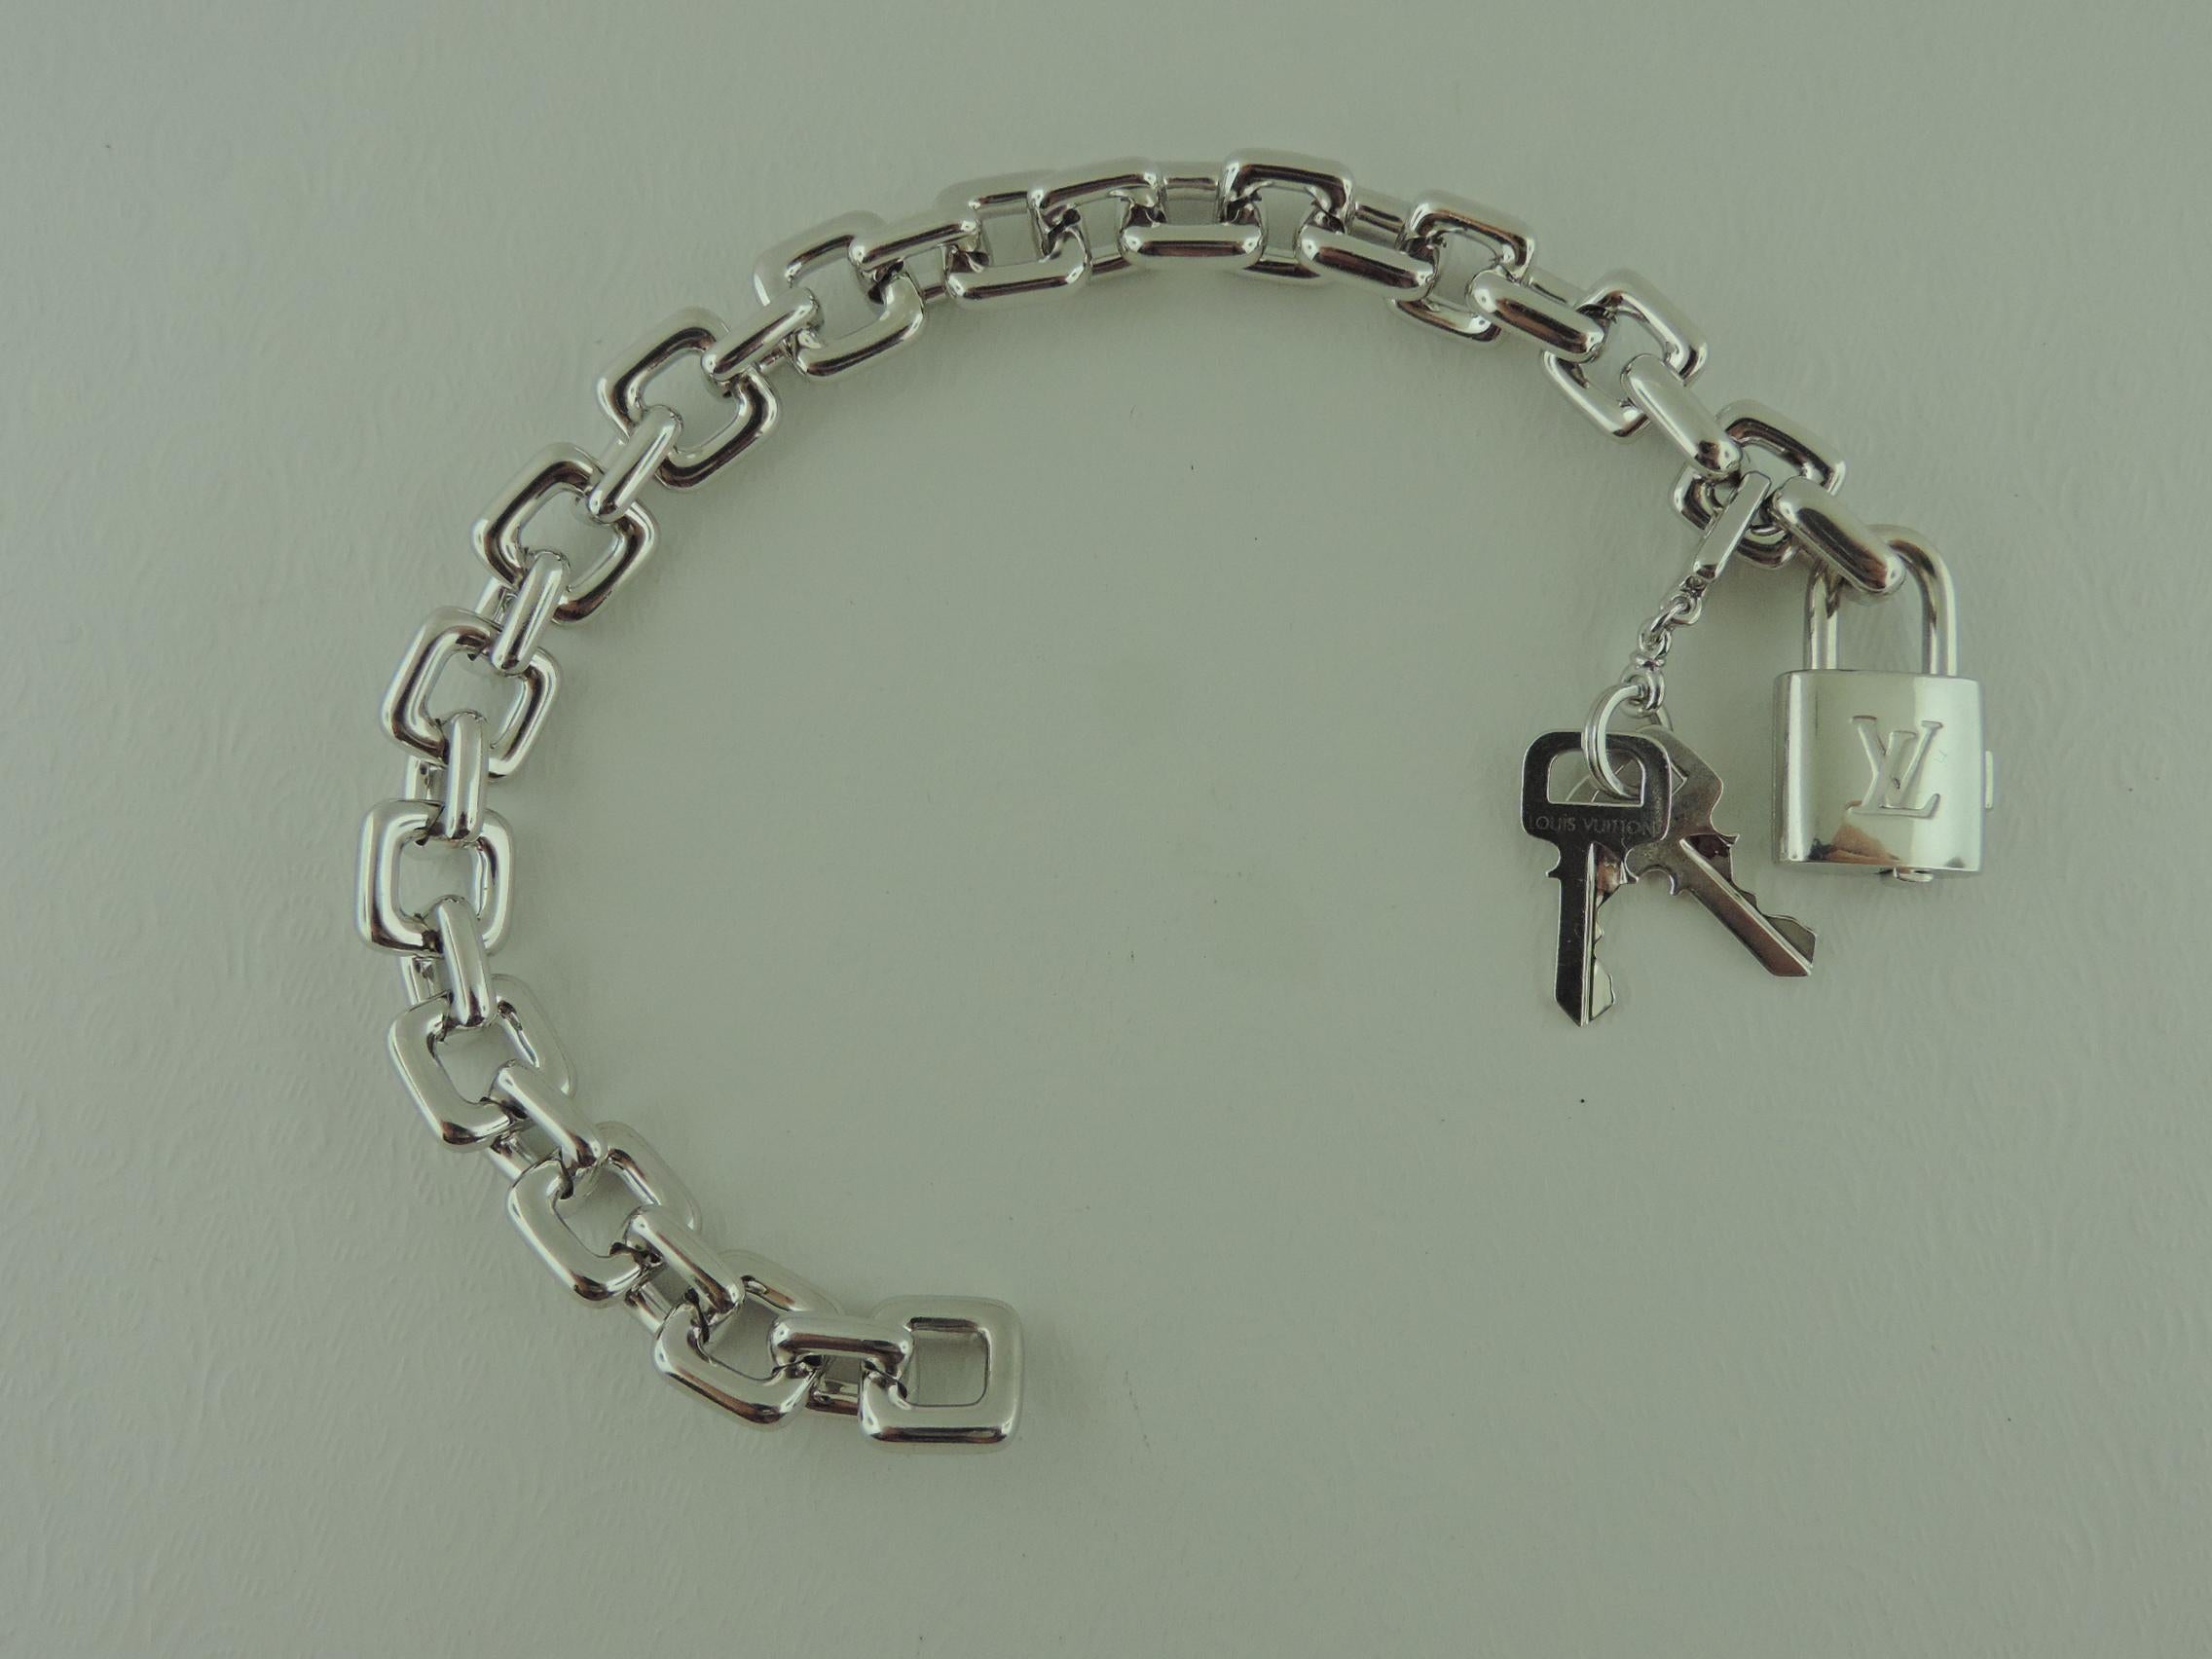 Buy online Lv Lock And Key Bracelet In Pakistan, Rs 1700, Best Price